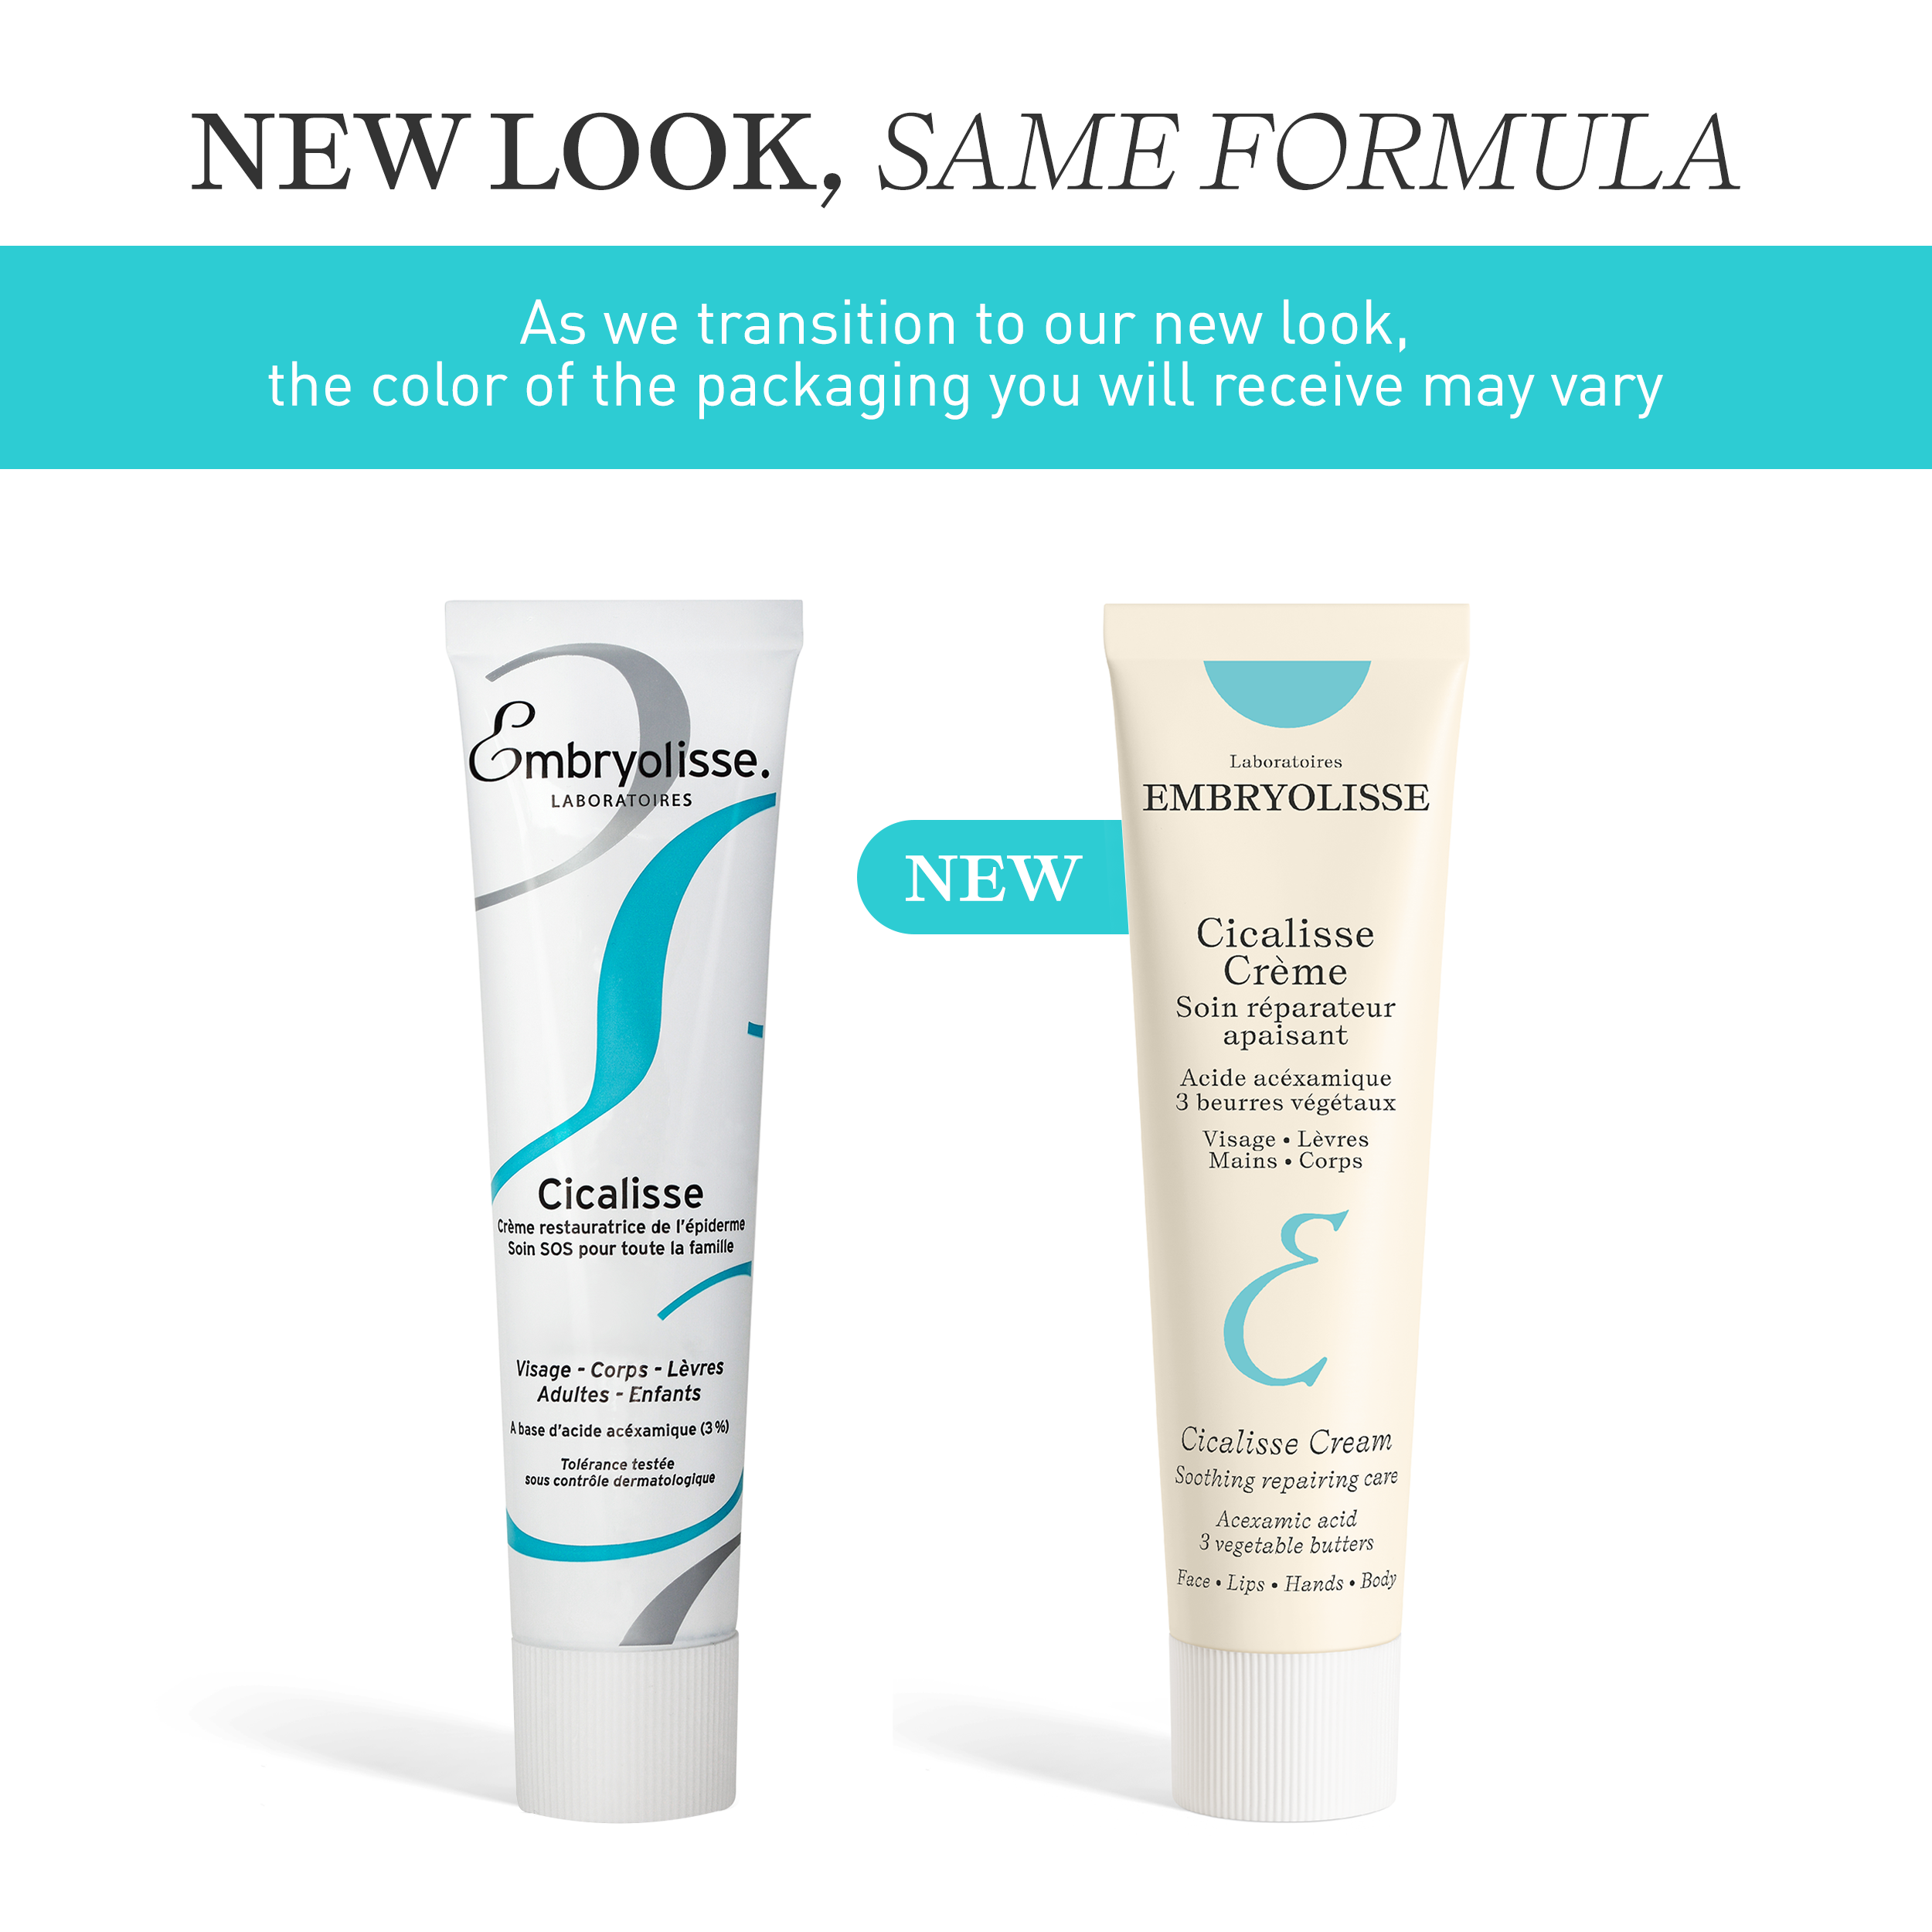 Cicalisse - Restorative & Protective skin Cream - Face, Body, Lip